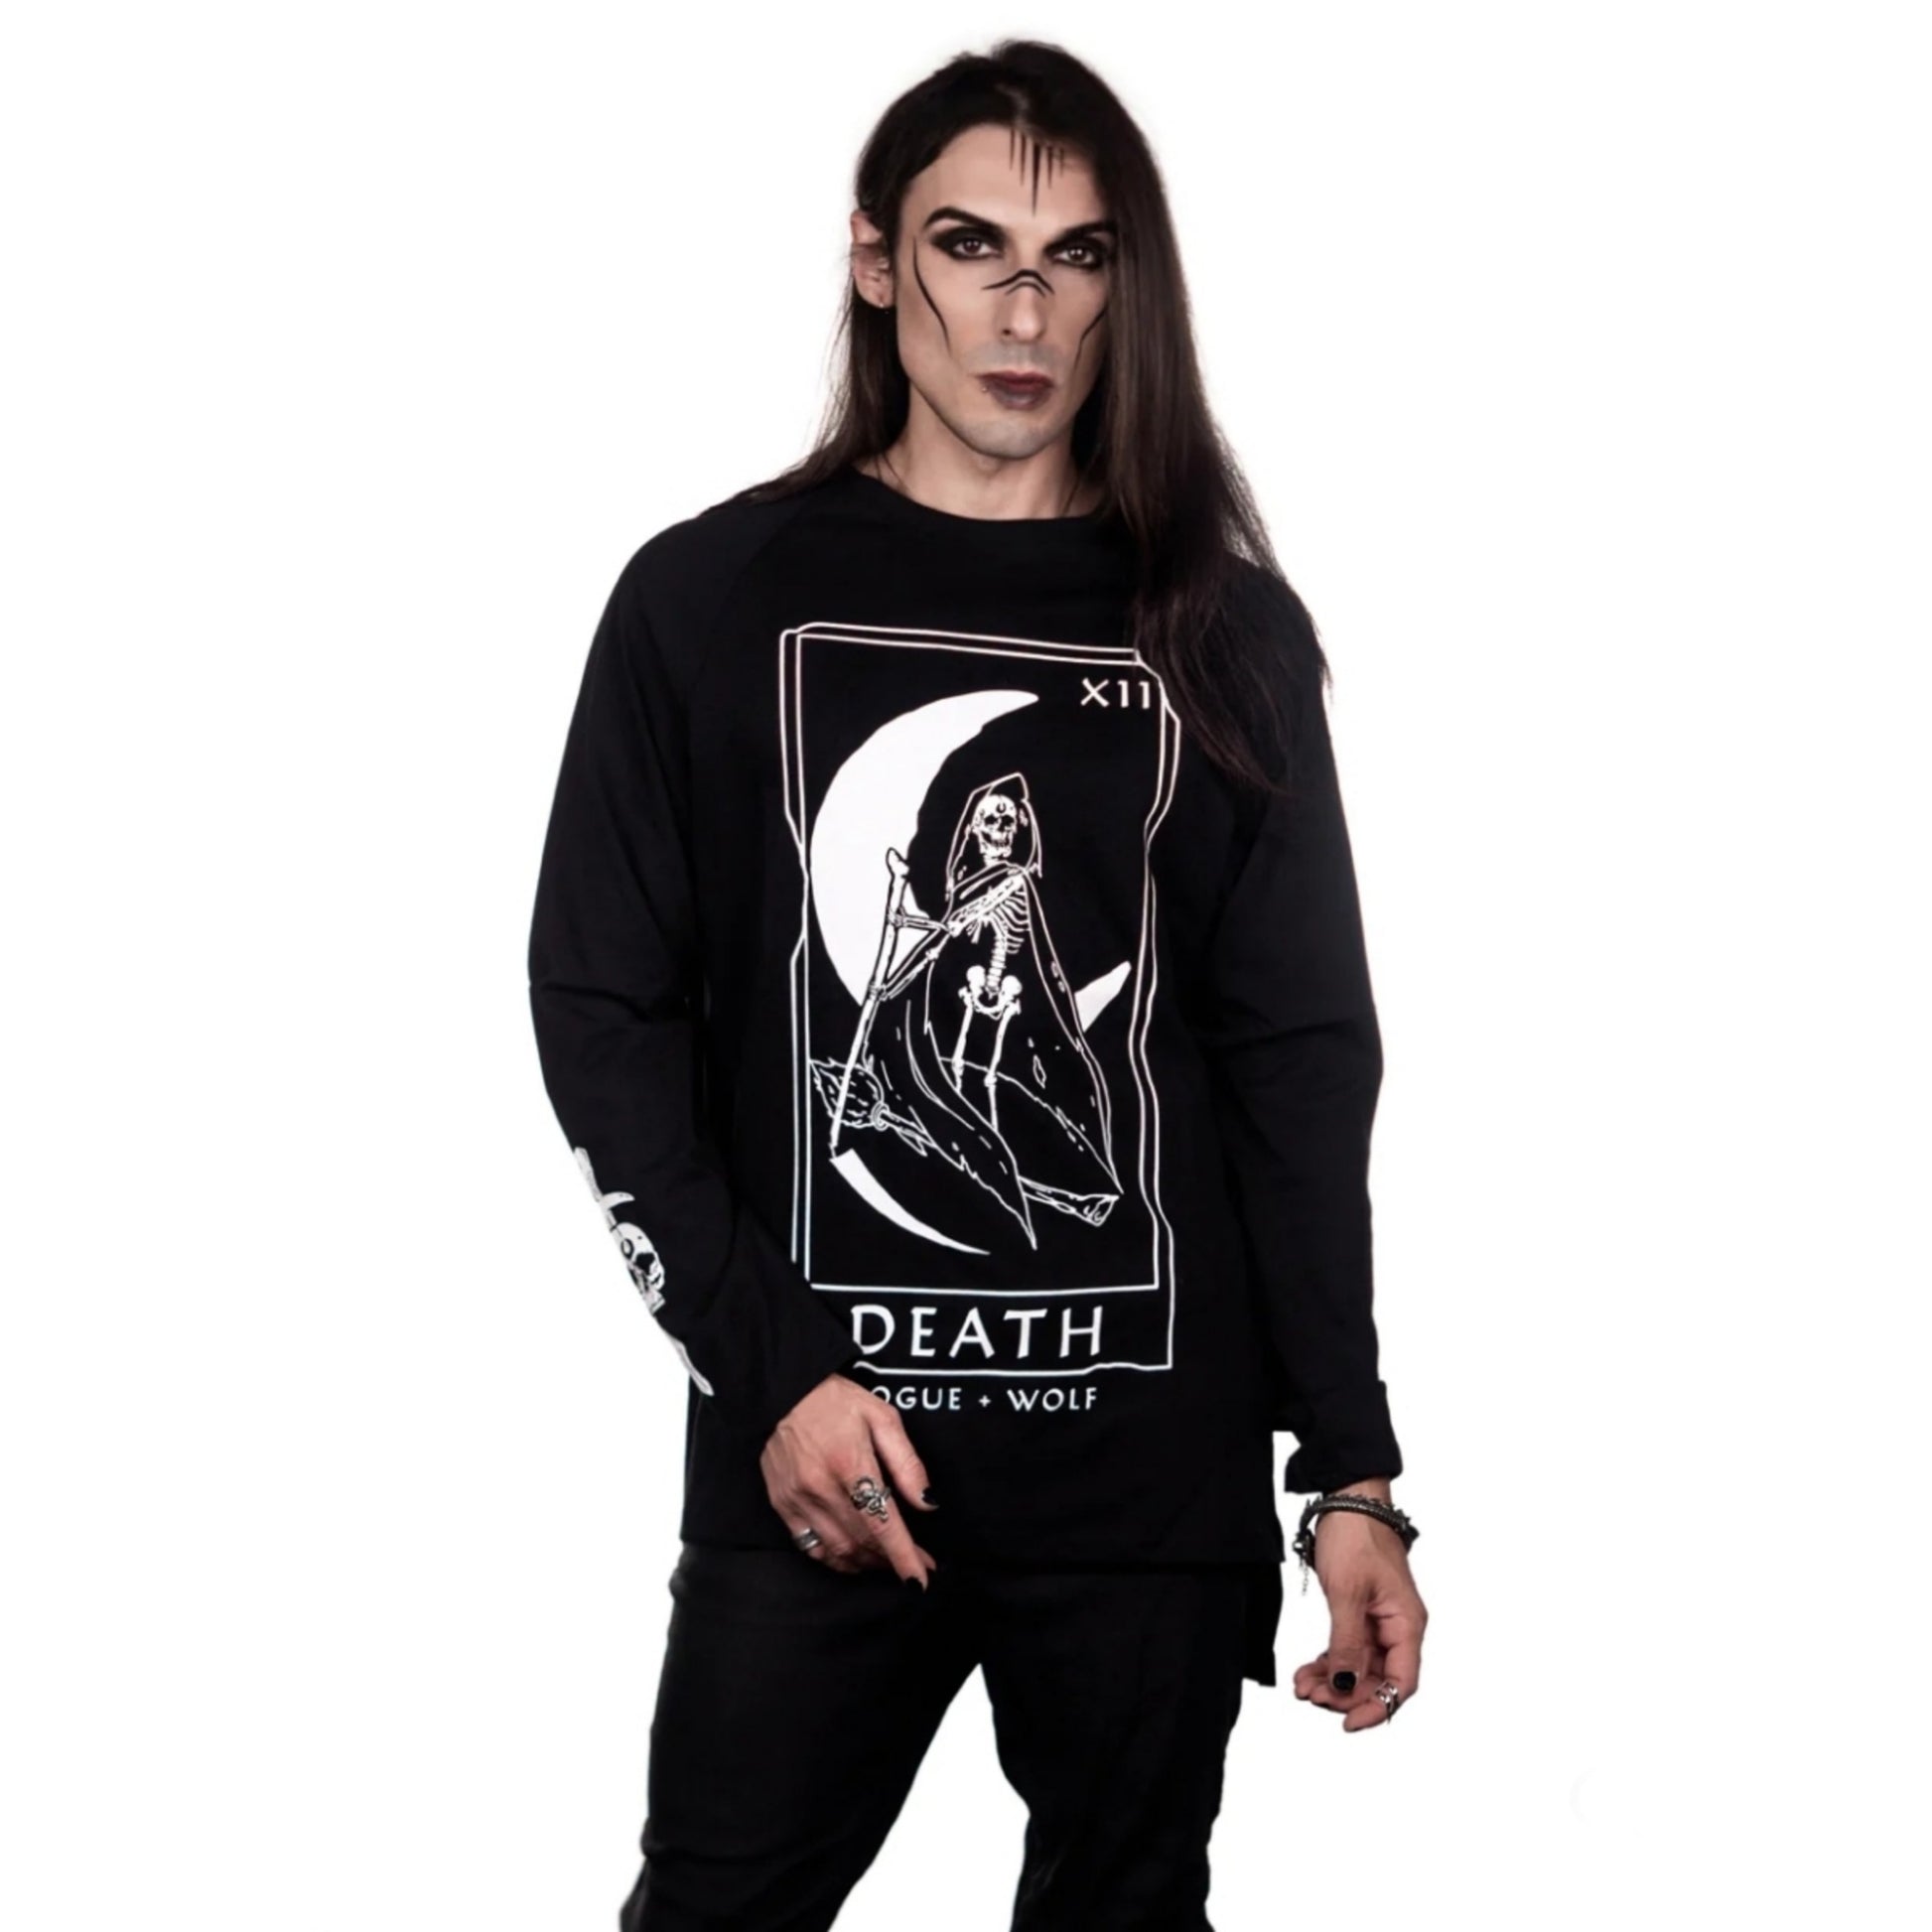 Men's Death Tarot Long Sleeve Tee | Black Oversized 100% Cotton - Rogue + Wolf - Shirts